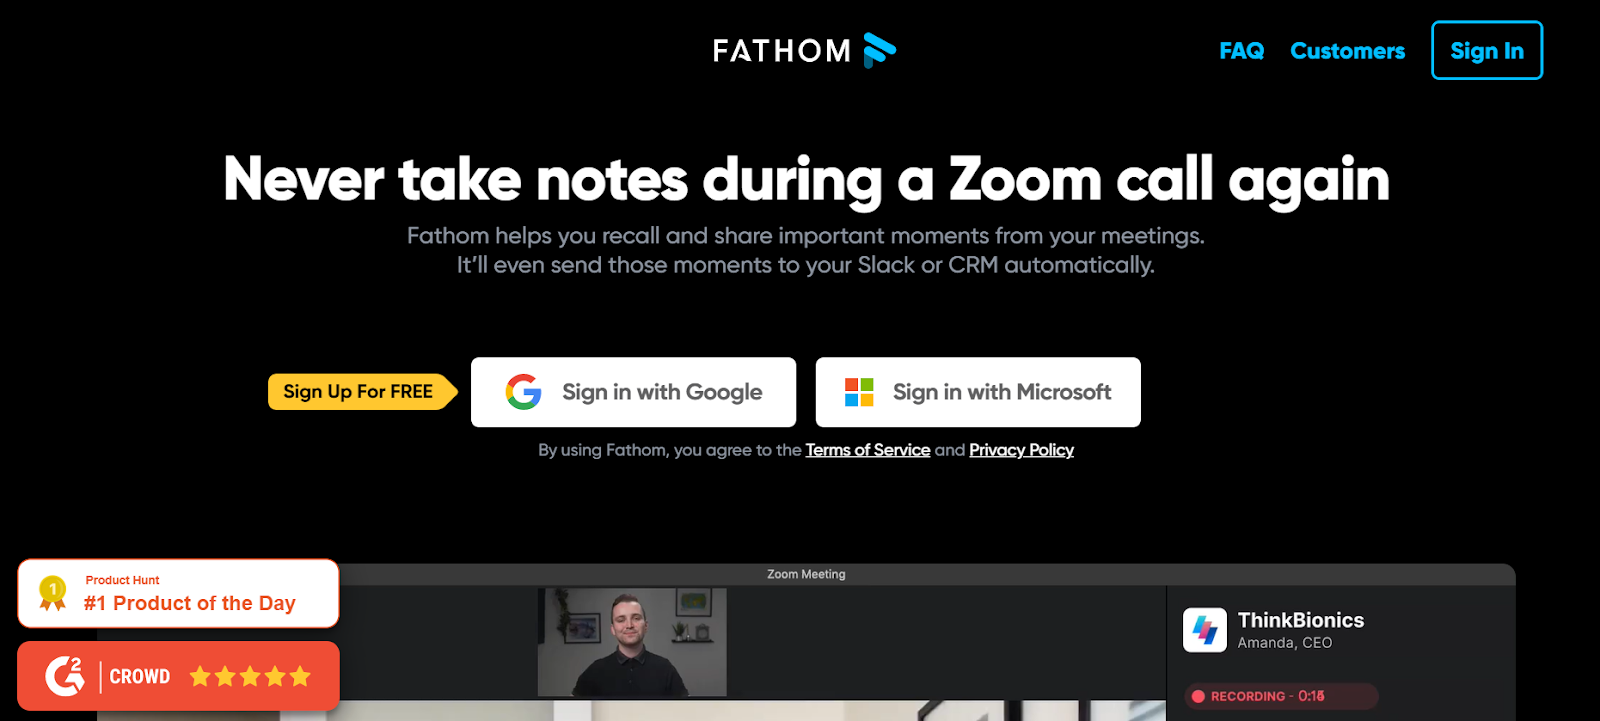 Fathom notetaking tool website